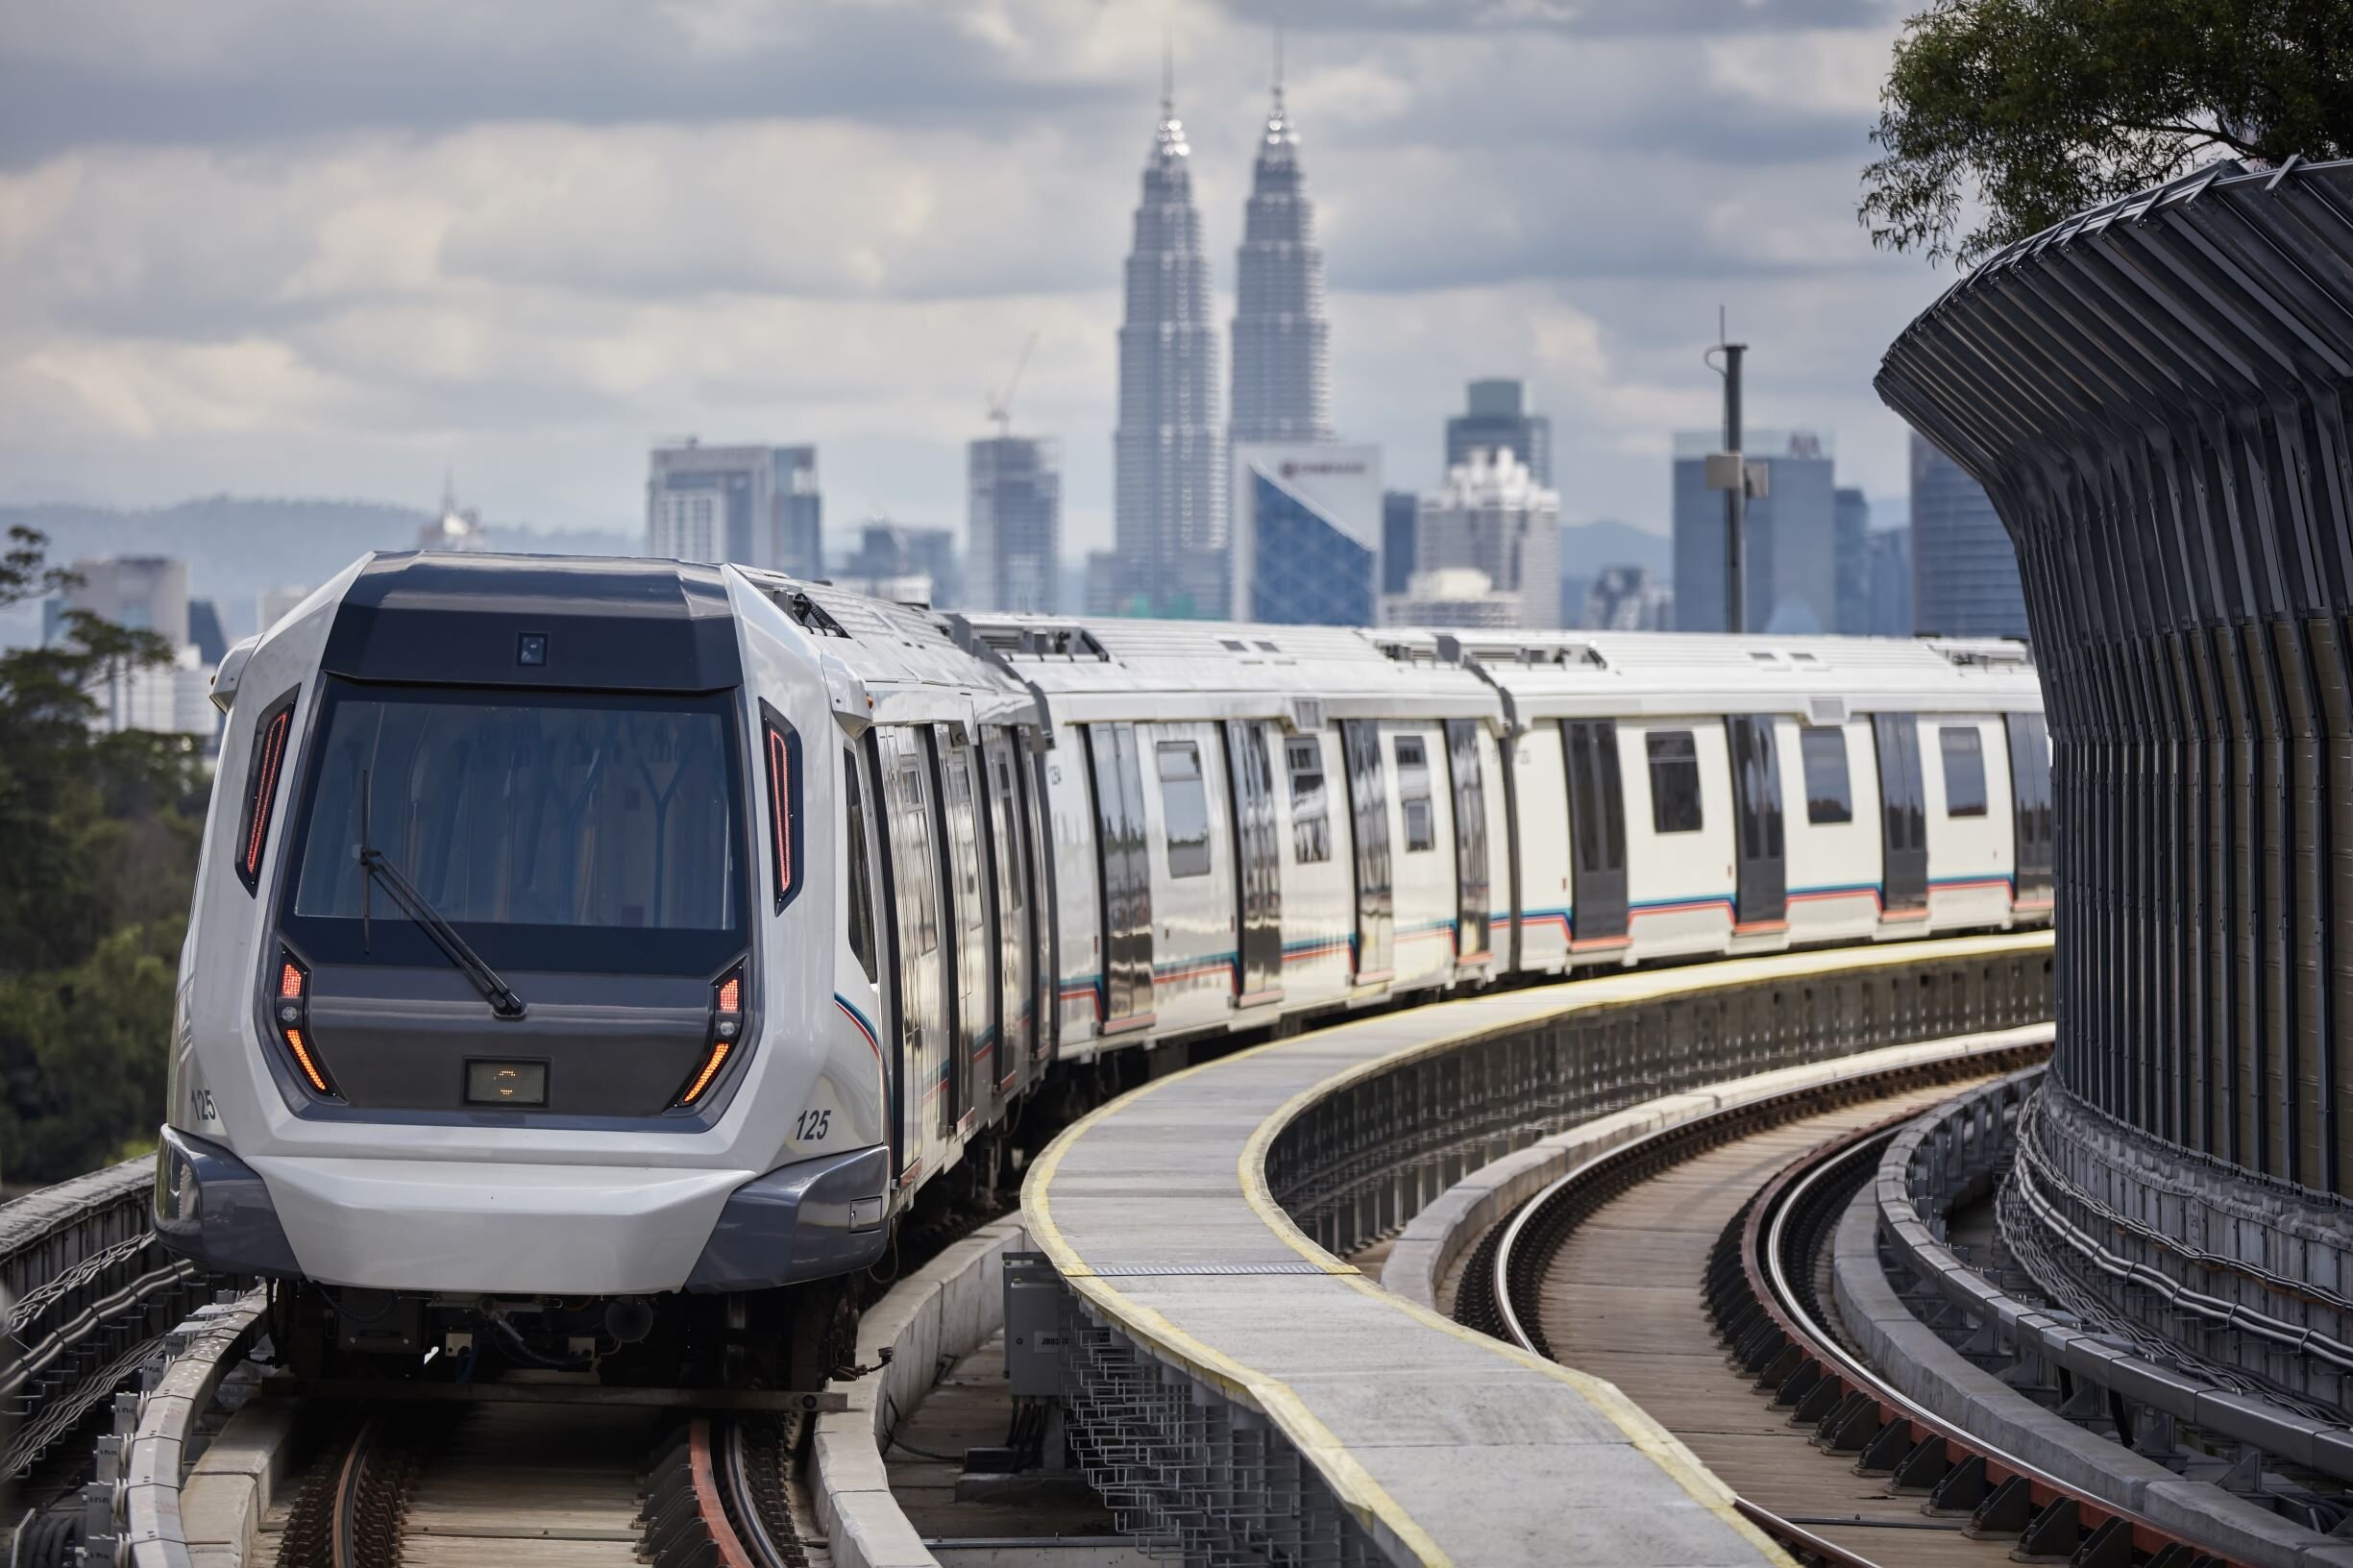 Звук приближающегося поезда. ЛРТ. MRT Train. Kuala Lumpur метро. Метро Куала Лумпур поезда.